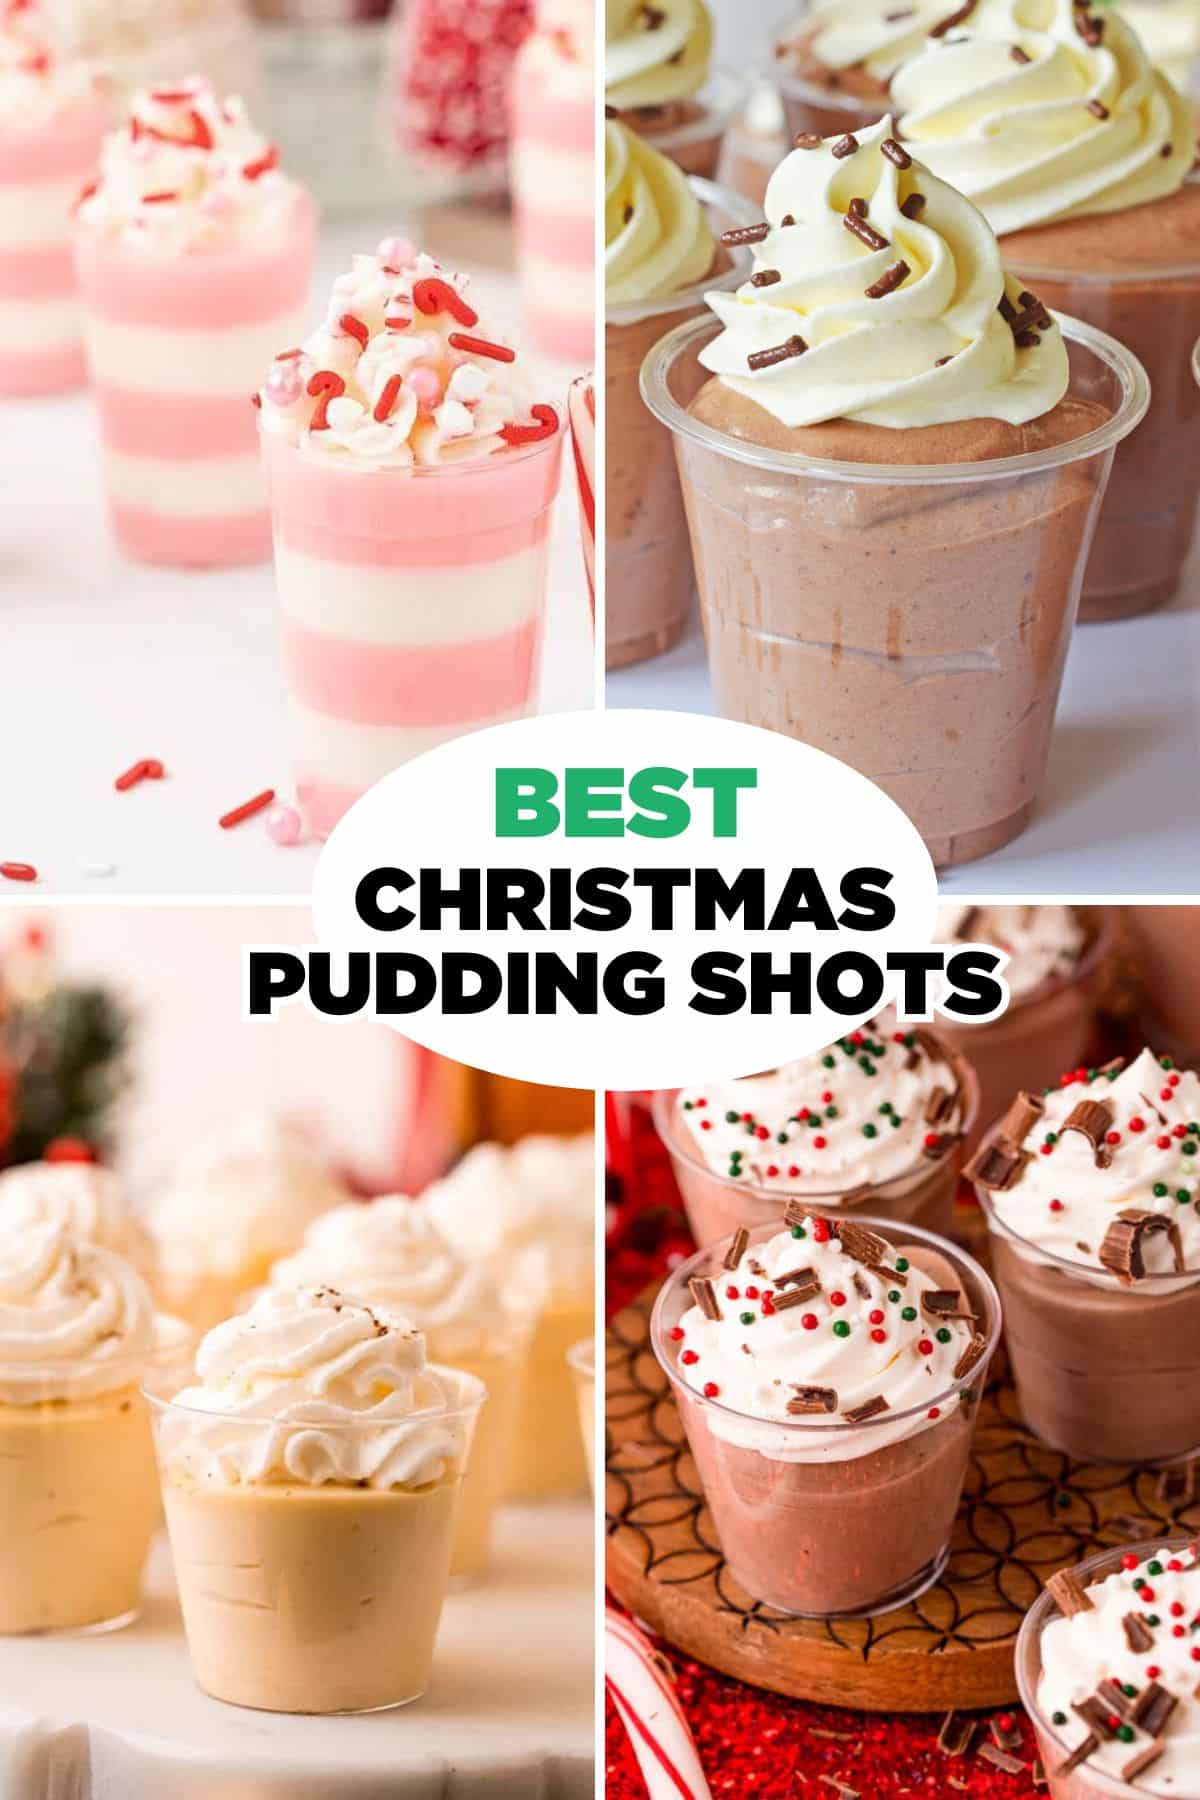 Best Christmas pudding shots.